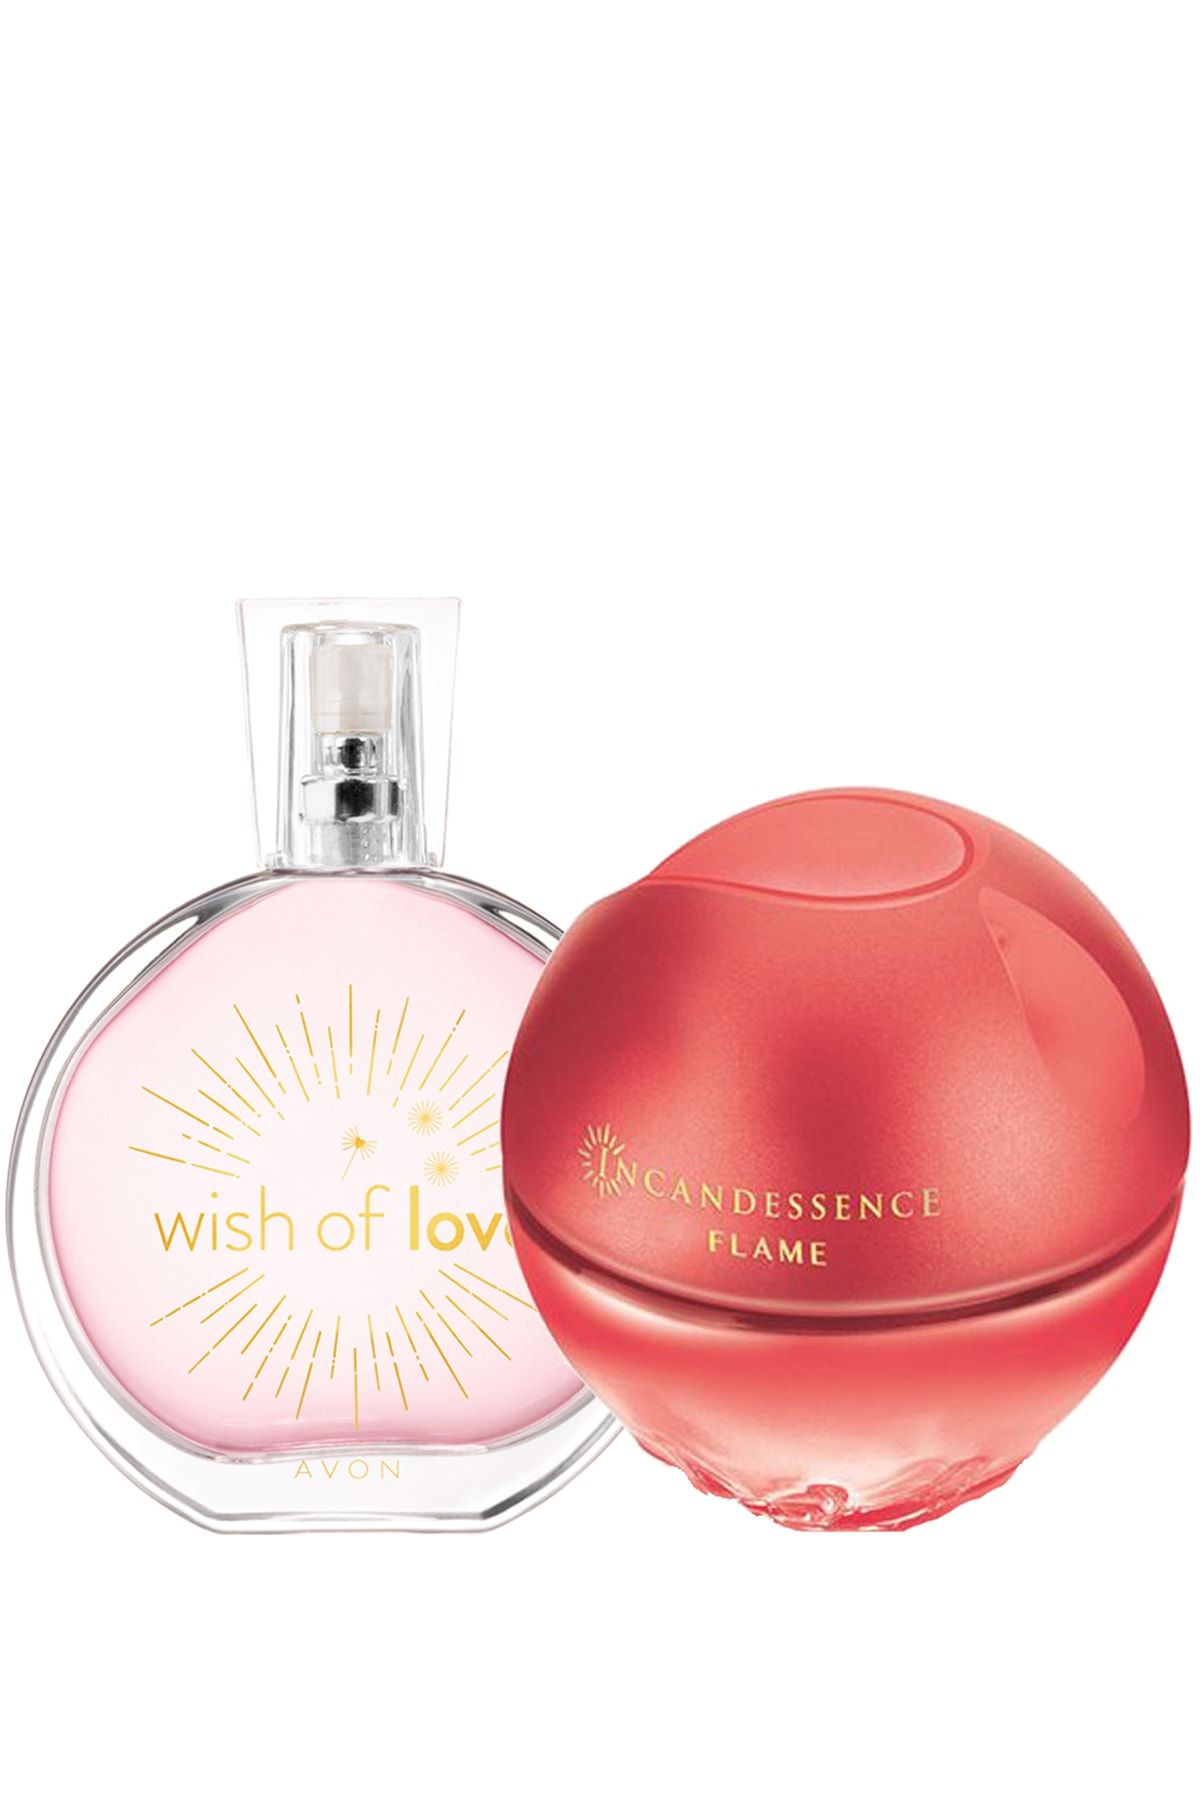 Avon Wish Of Love Ve Incandessence Flame Kadın Parfüm Paketi